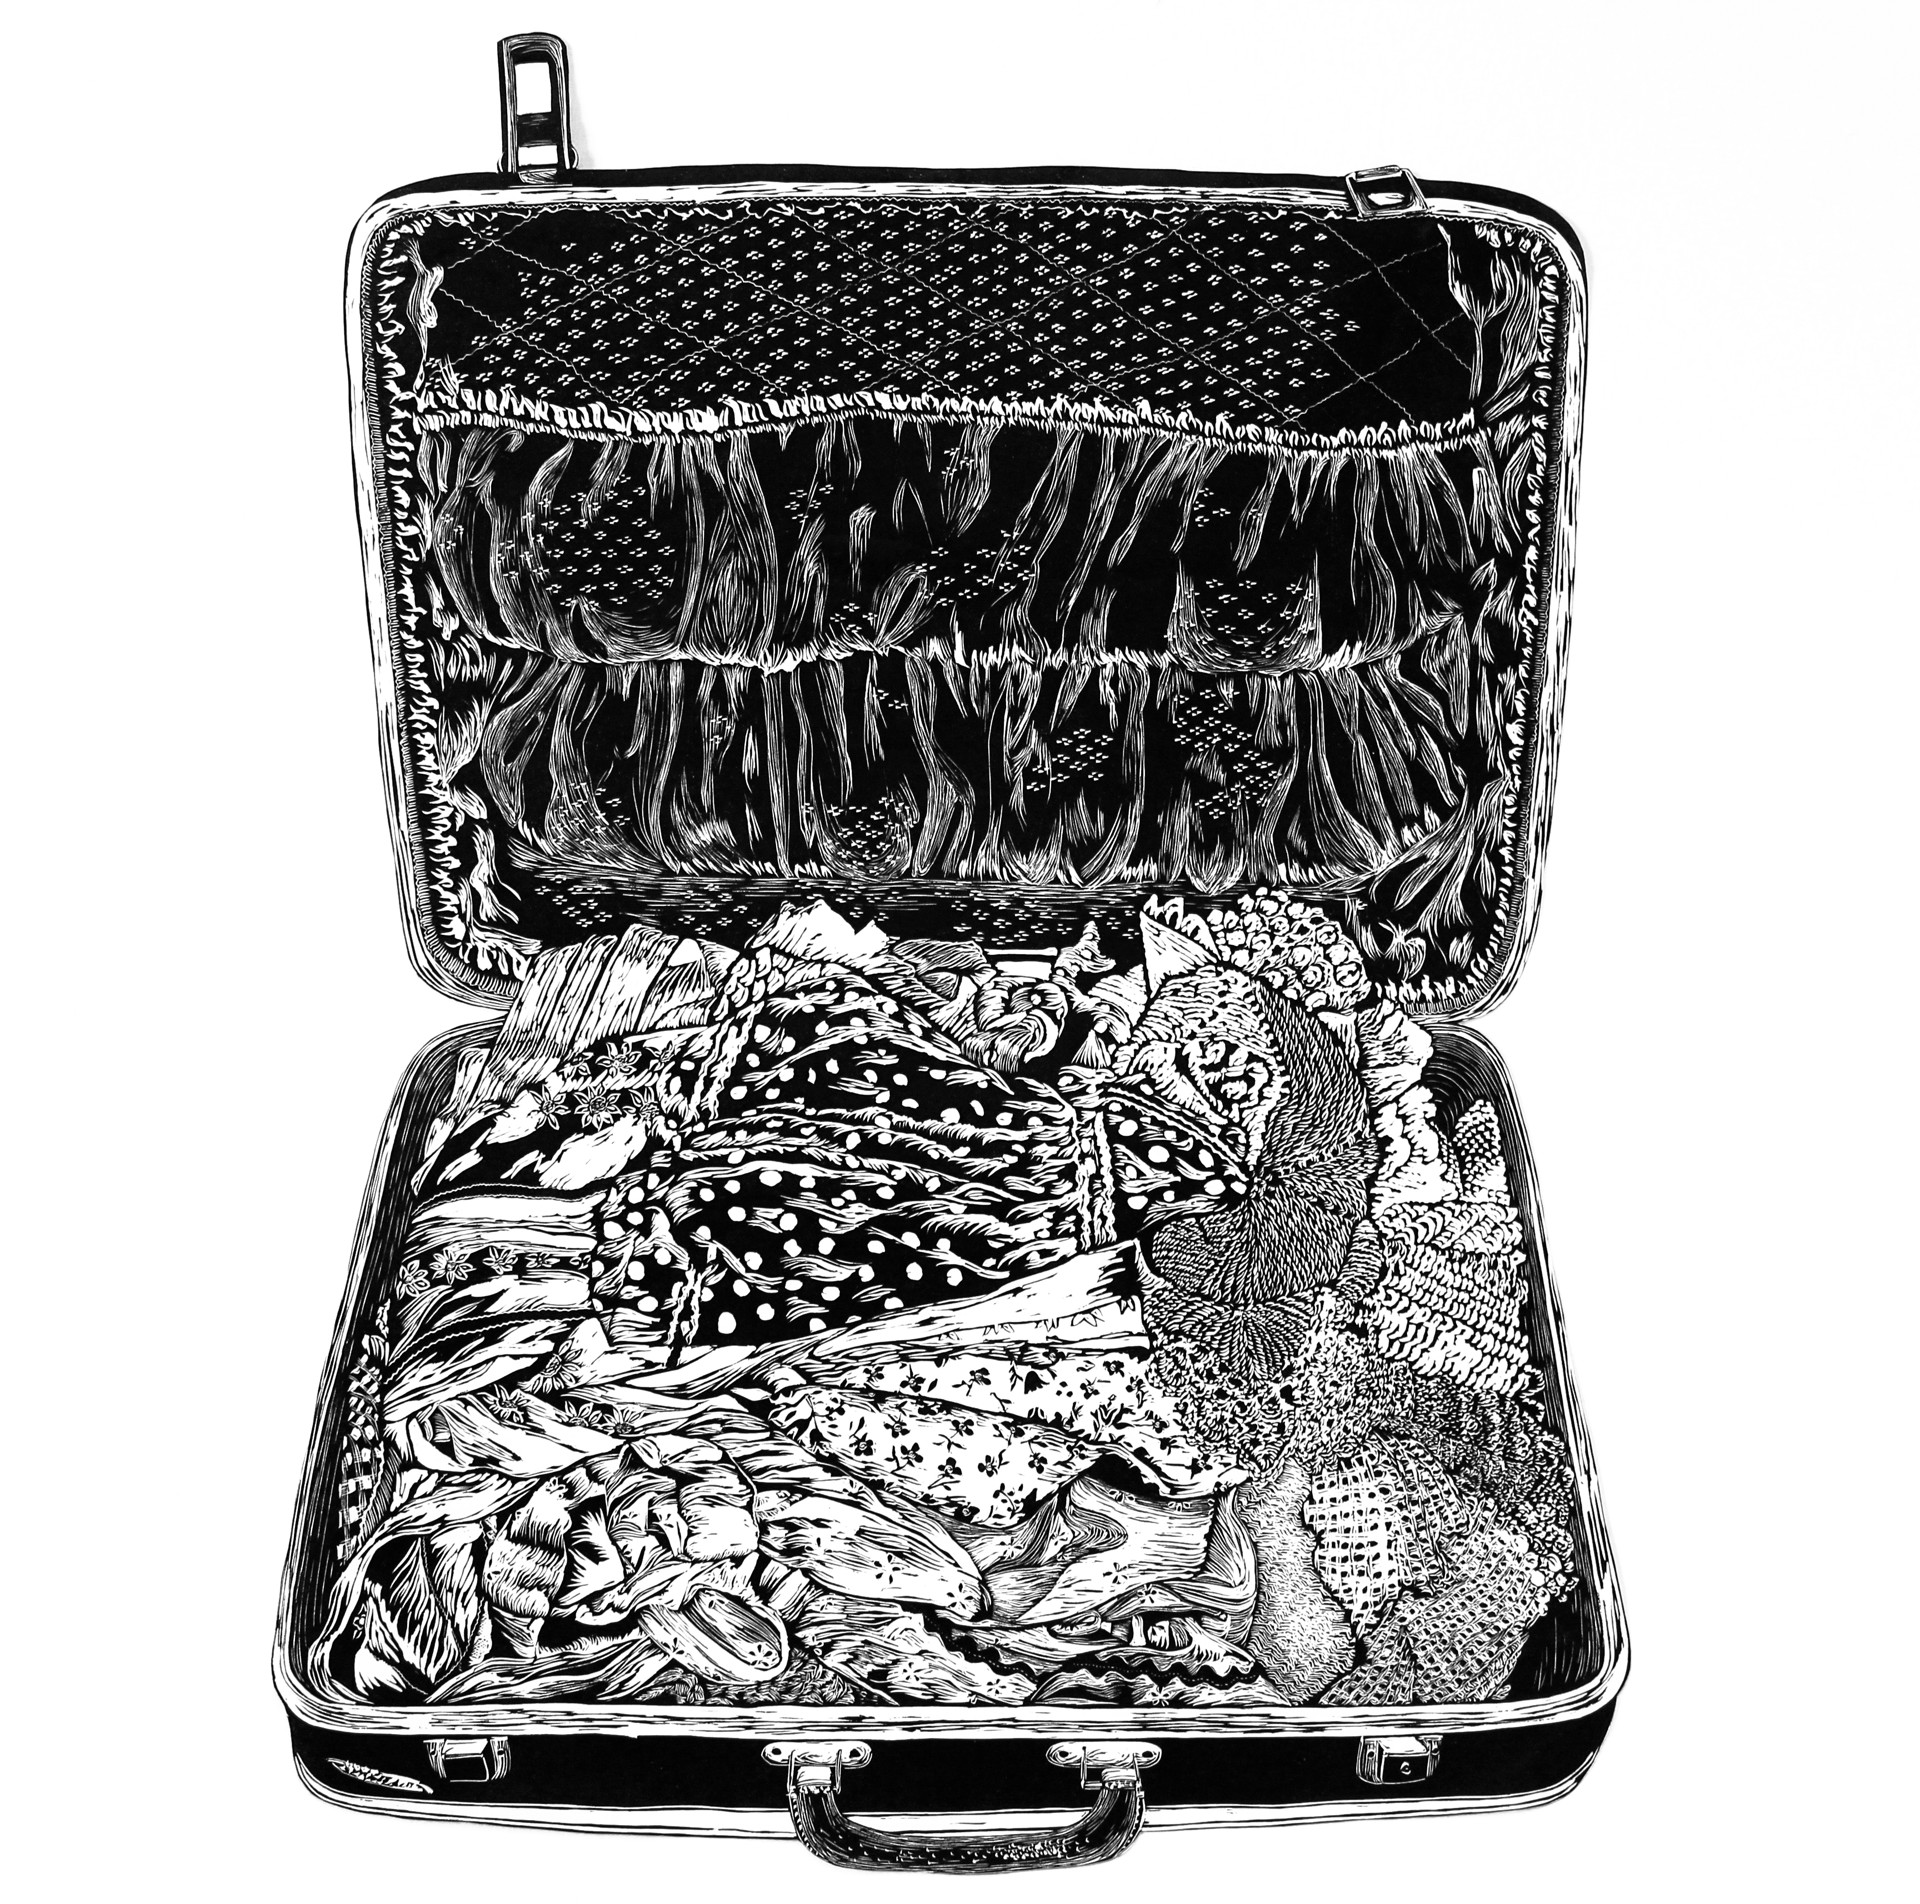 Suitcase of Keepsakes by Masy Hebert Chighizola